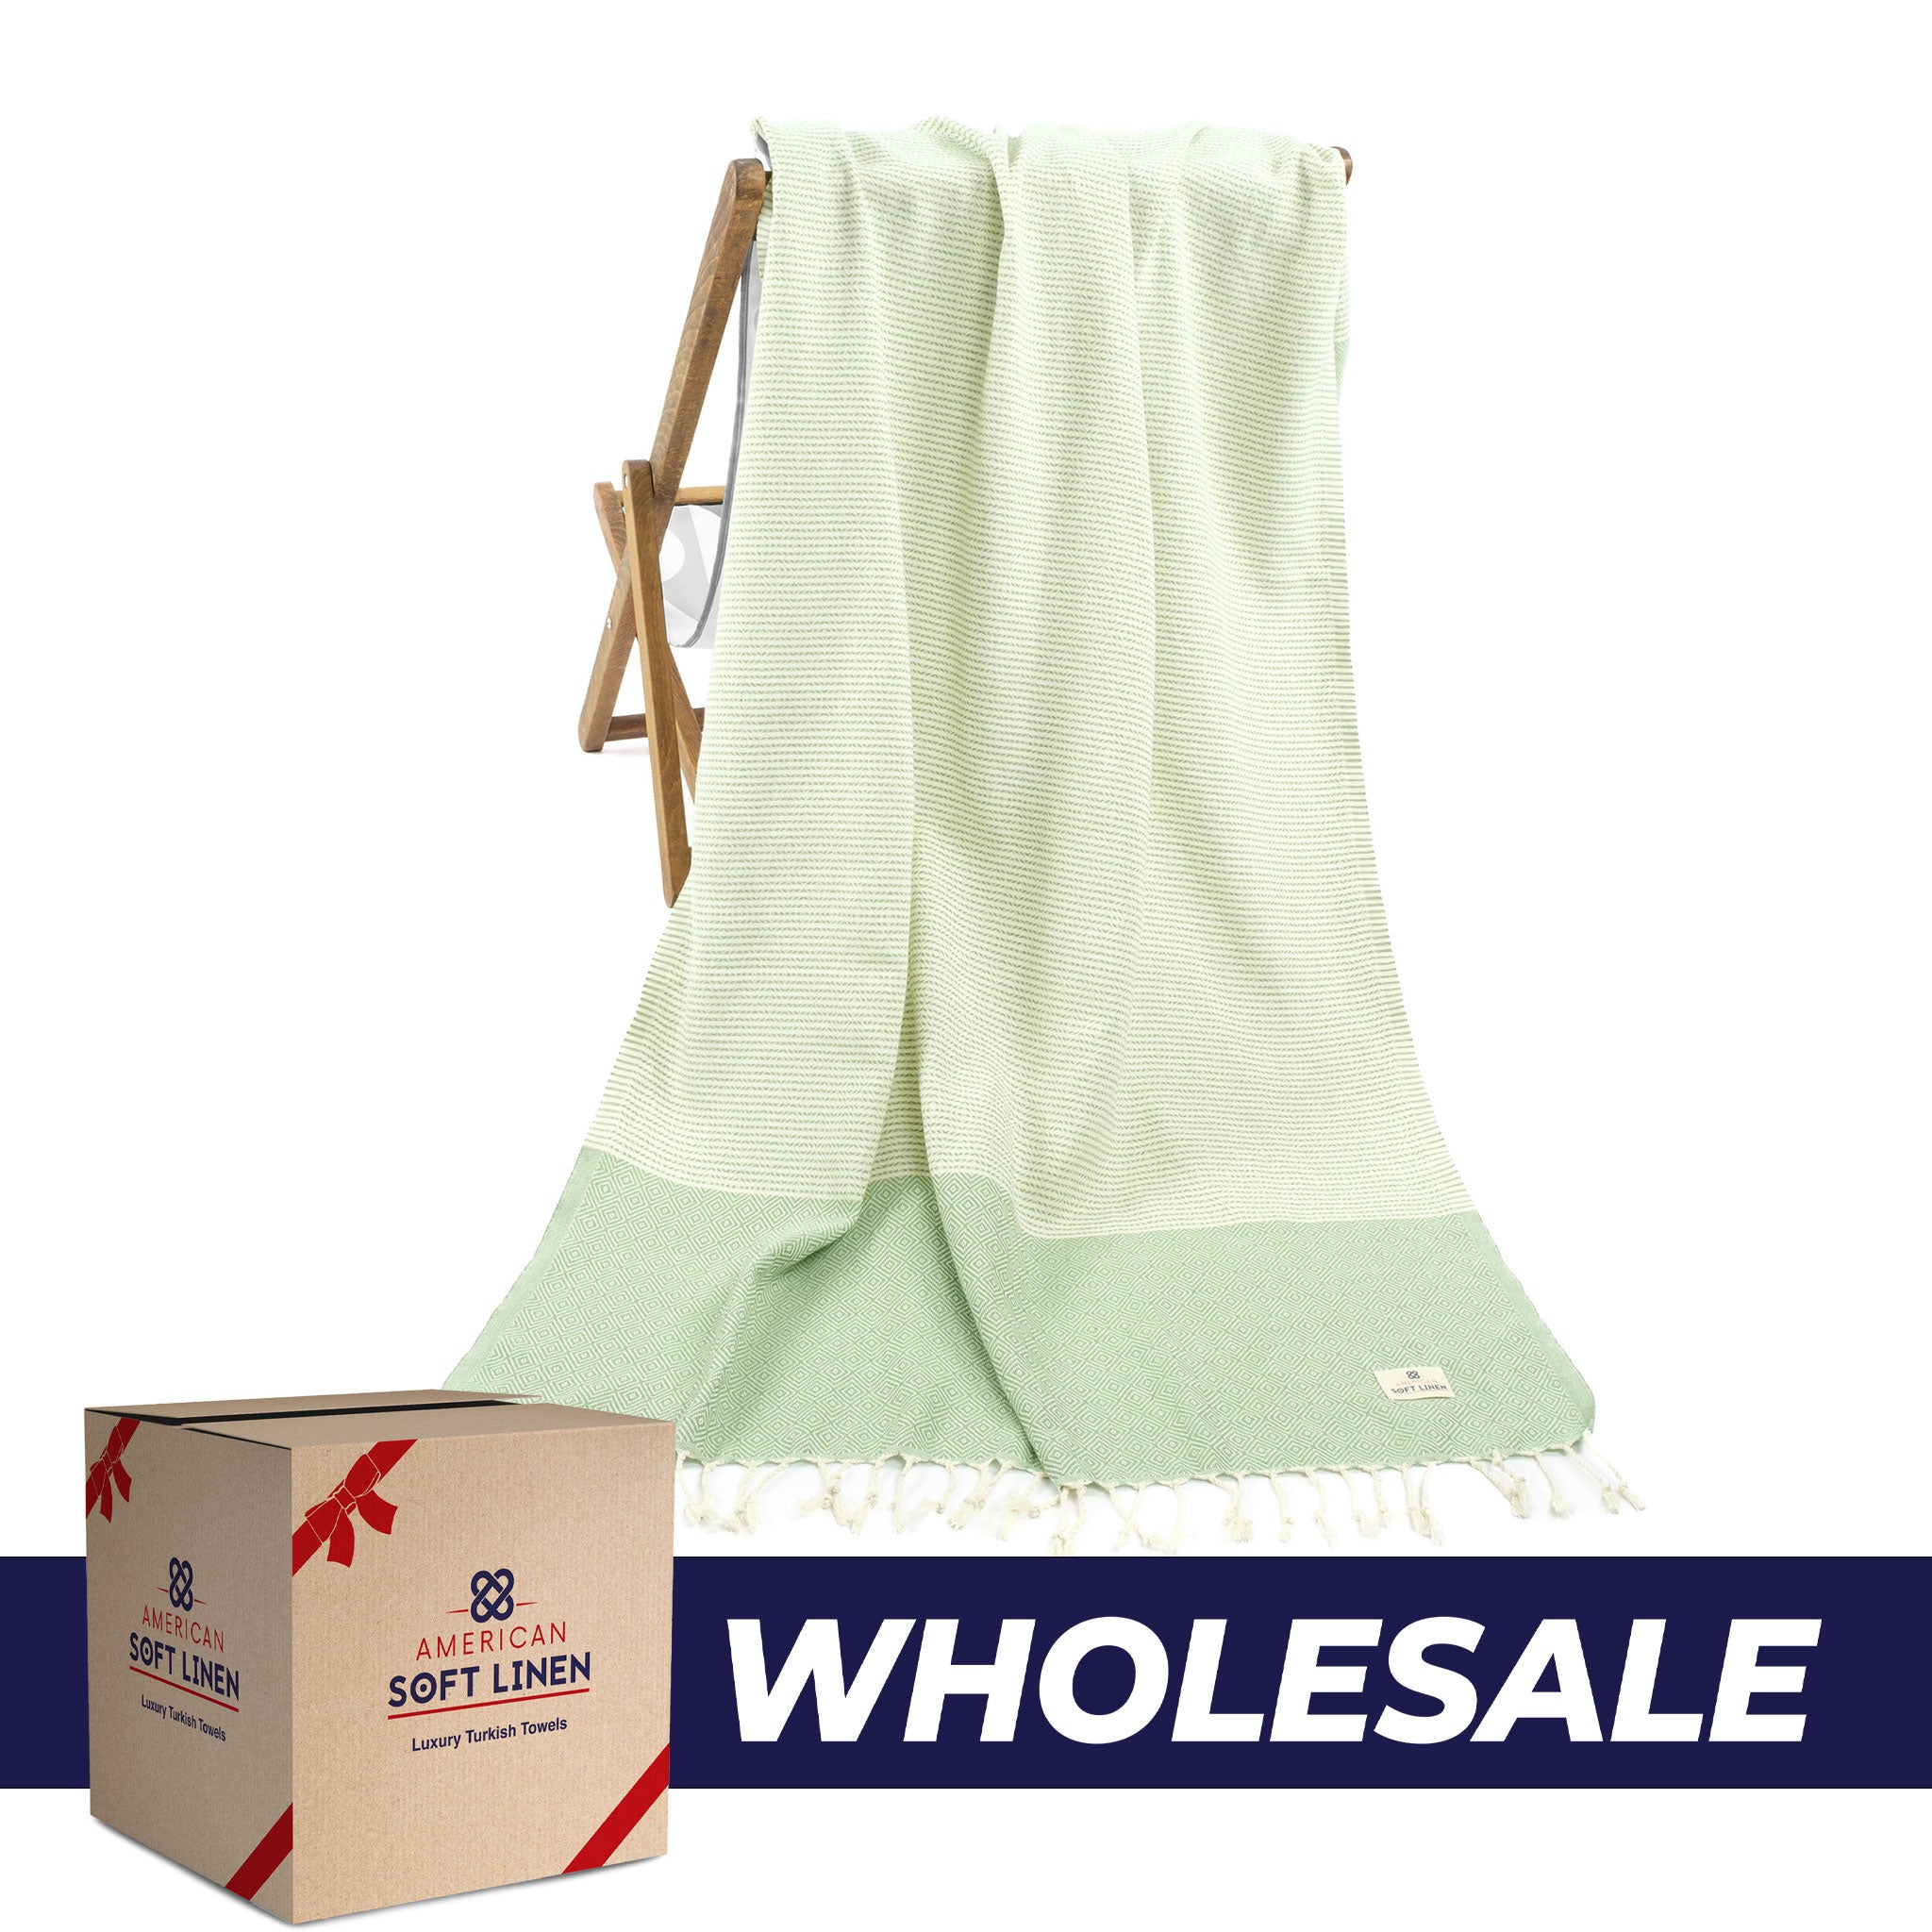 American Soft Linen - 100% Cotton Turkish Peshtemal Towels - 44 Set Case Pack - Green - 0